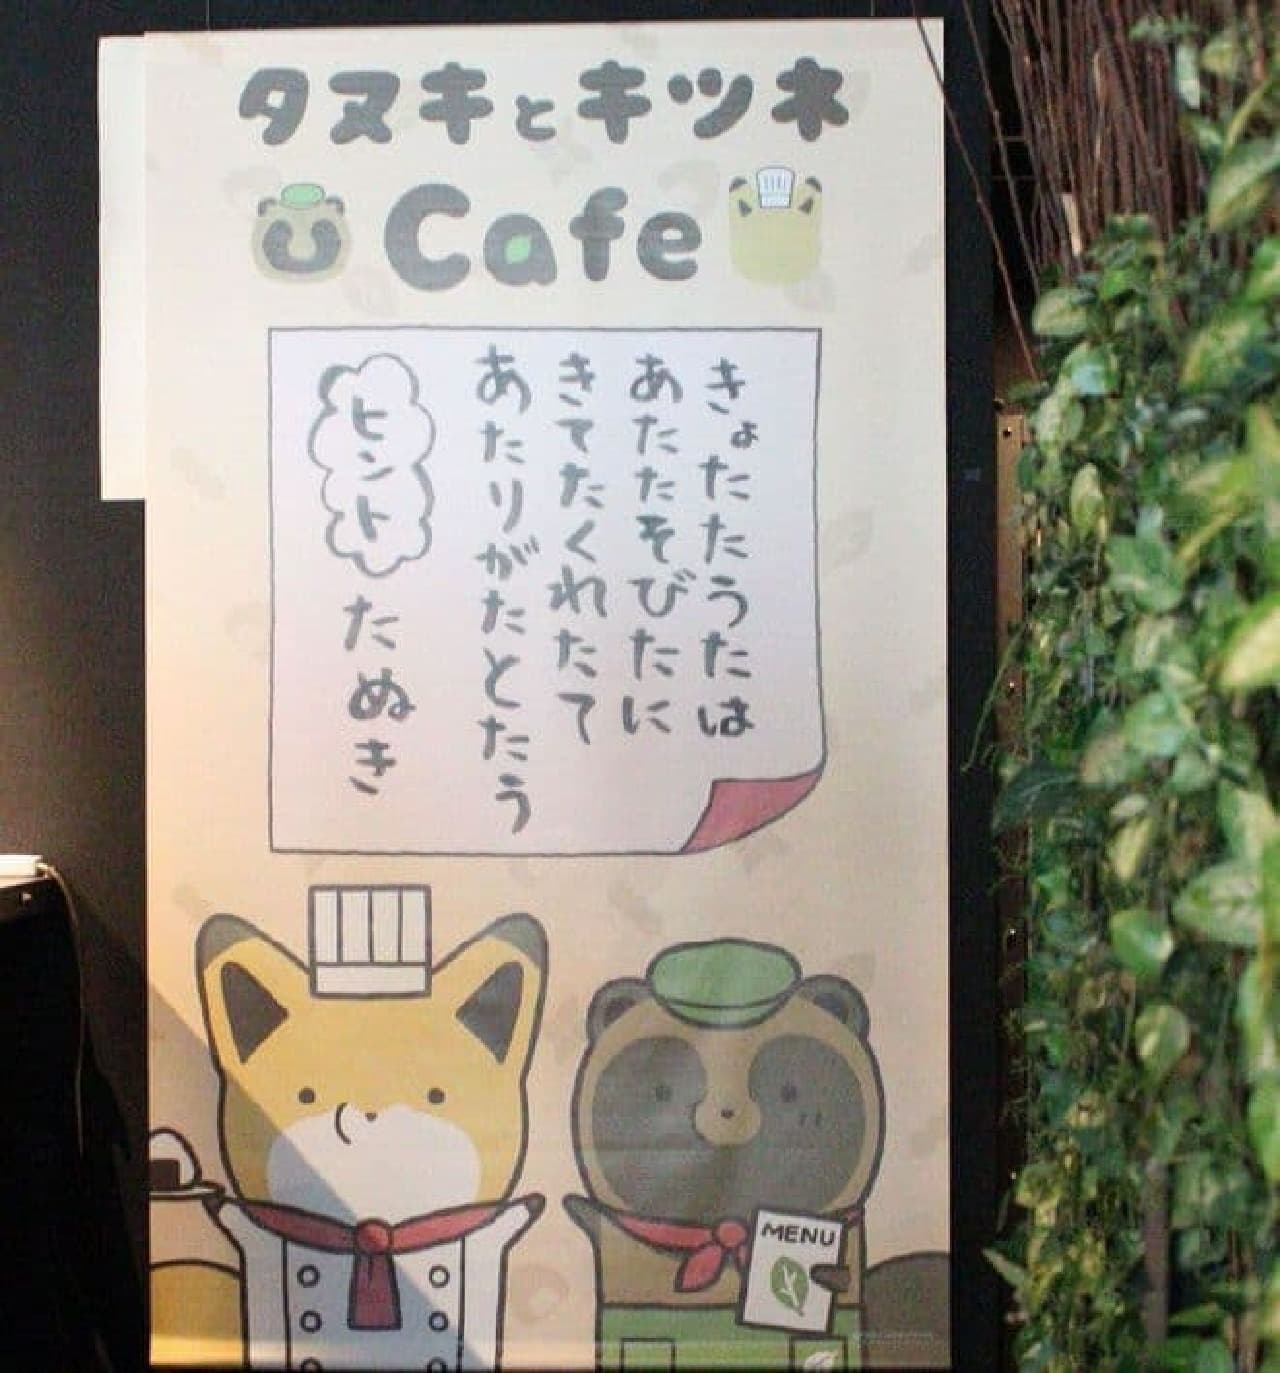 "Tanuki and Kitsune Cafe" is the first collaboration between "Tanuki and Kitsune" drawn by Mr. Atamoto and "BOMA TOKYO" in Shibuya, Tokyo.